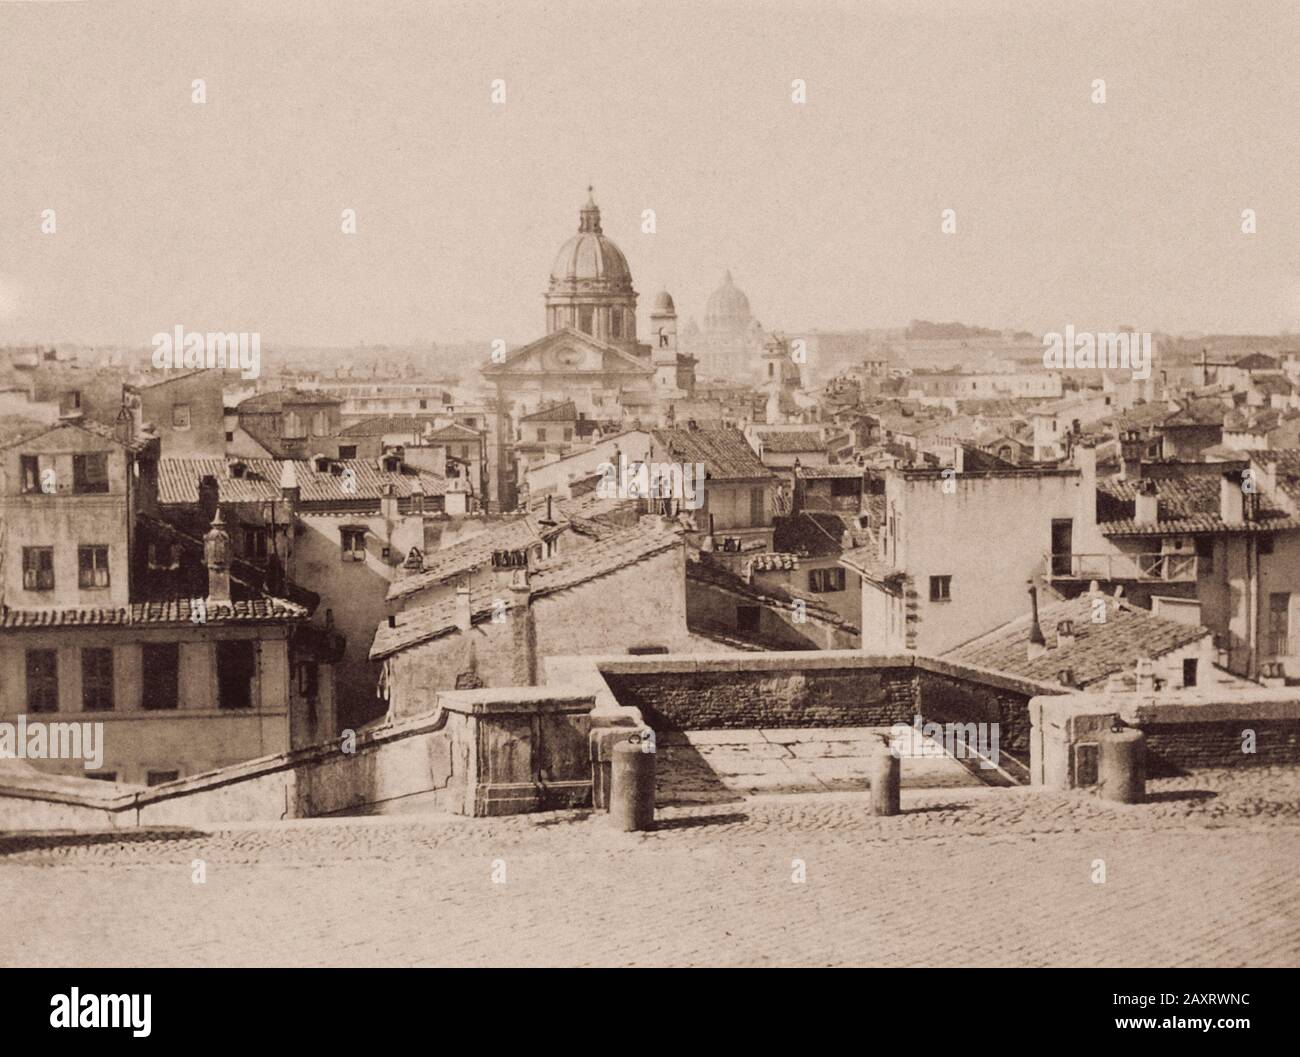 Vista panorámica de Roma. Desde el álbum 'Photographic views of the main monumentos of Rome', 1860 Foto de stock